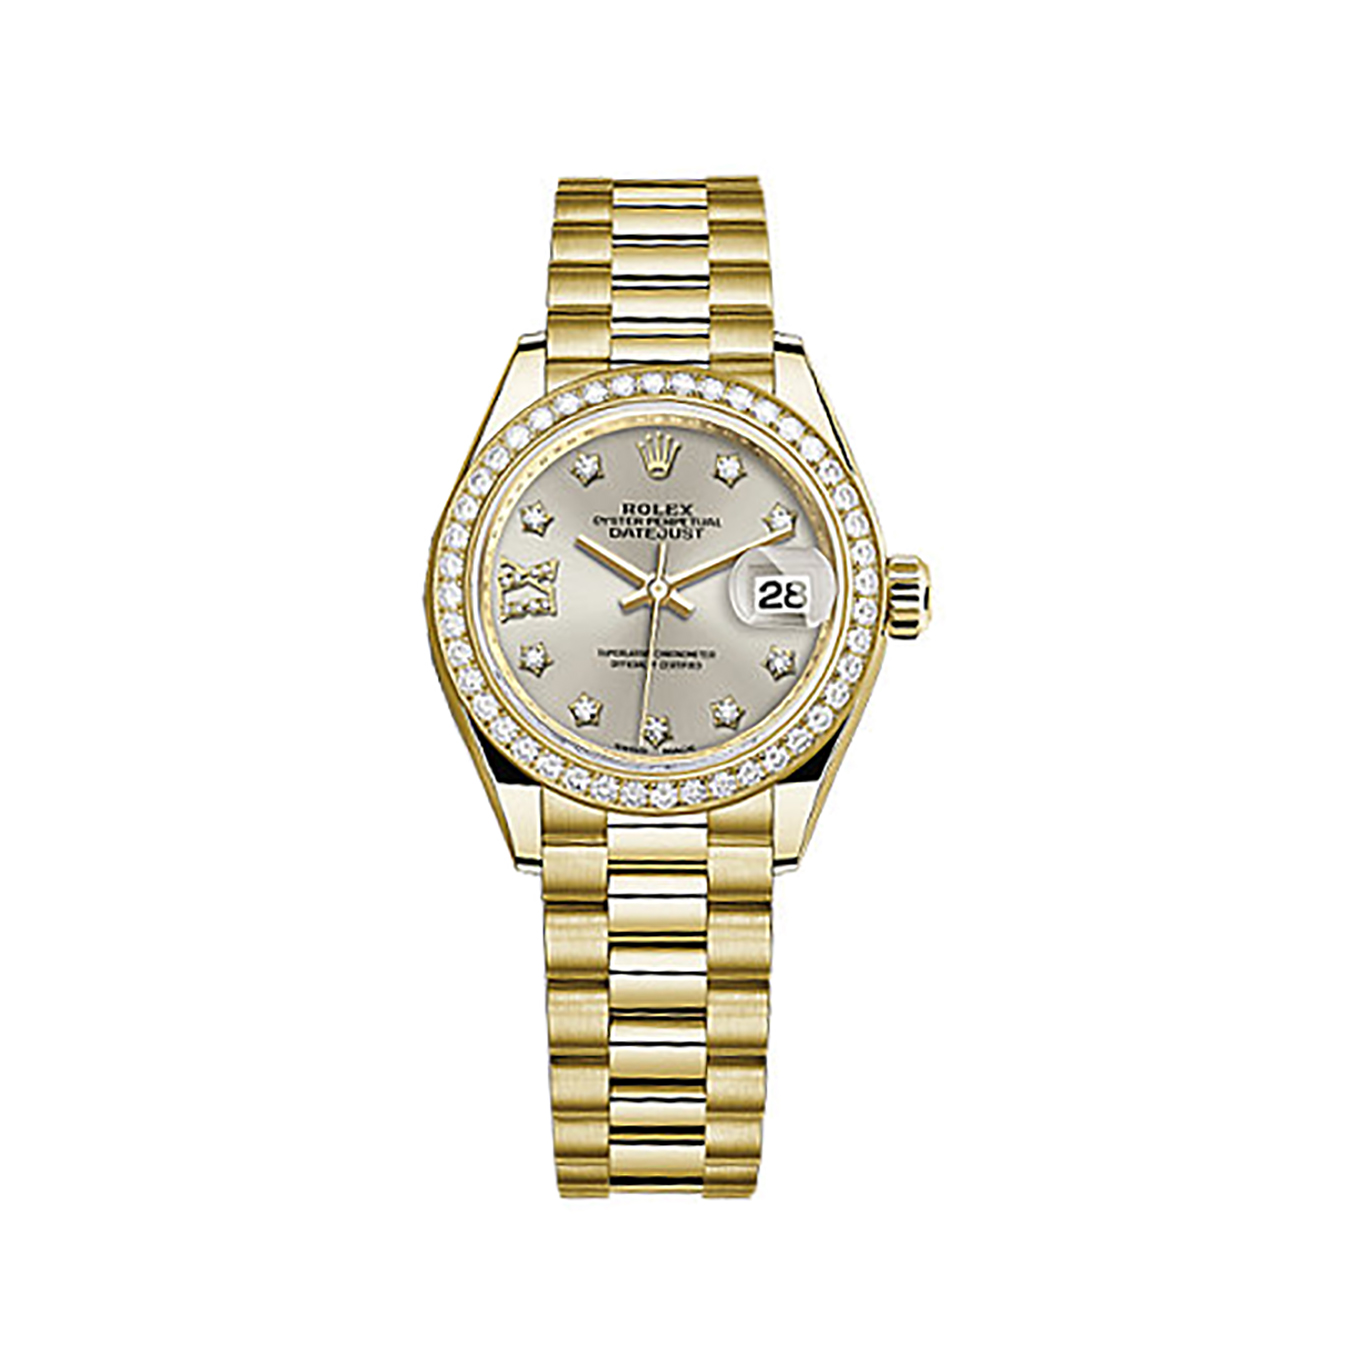 Lady-Datejust 28 279138RBR Gold & Diamonds Watch (Silver Set with Diamonds)